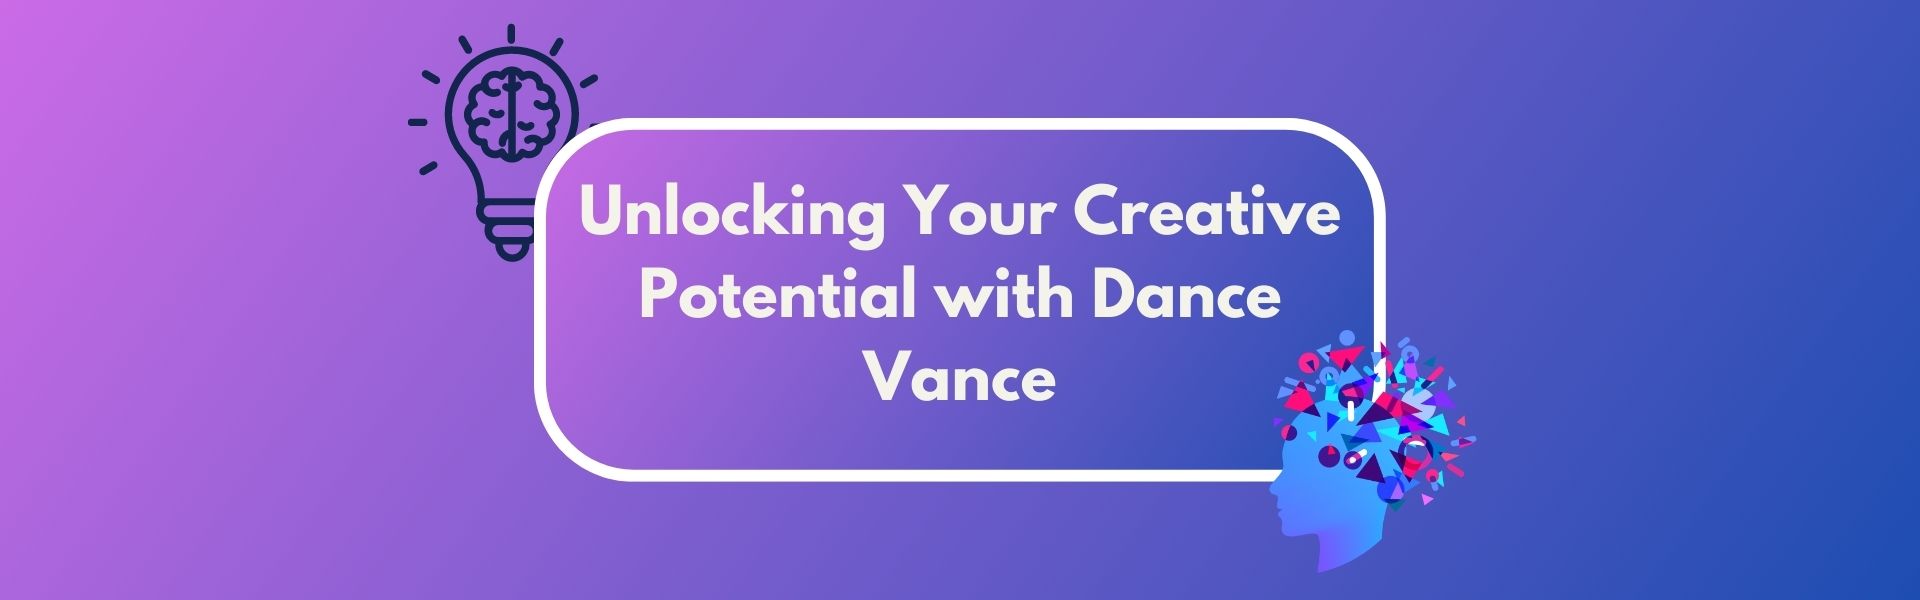 Dance Vance Blog